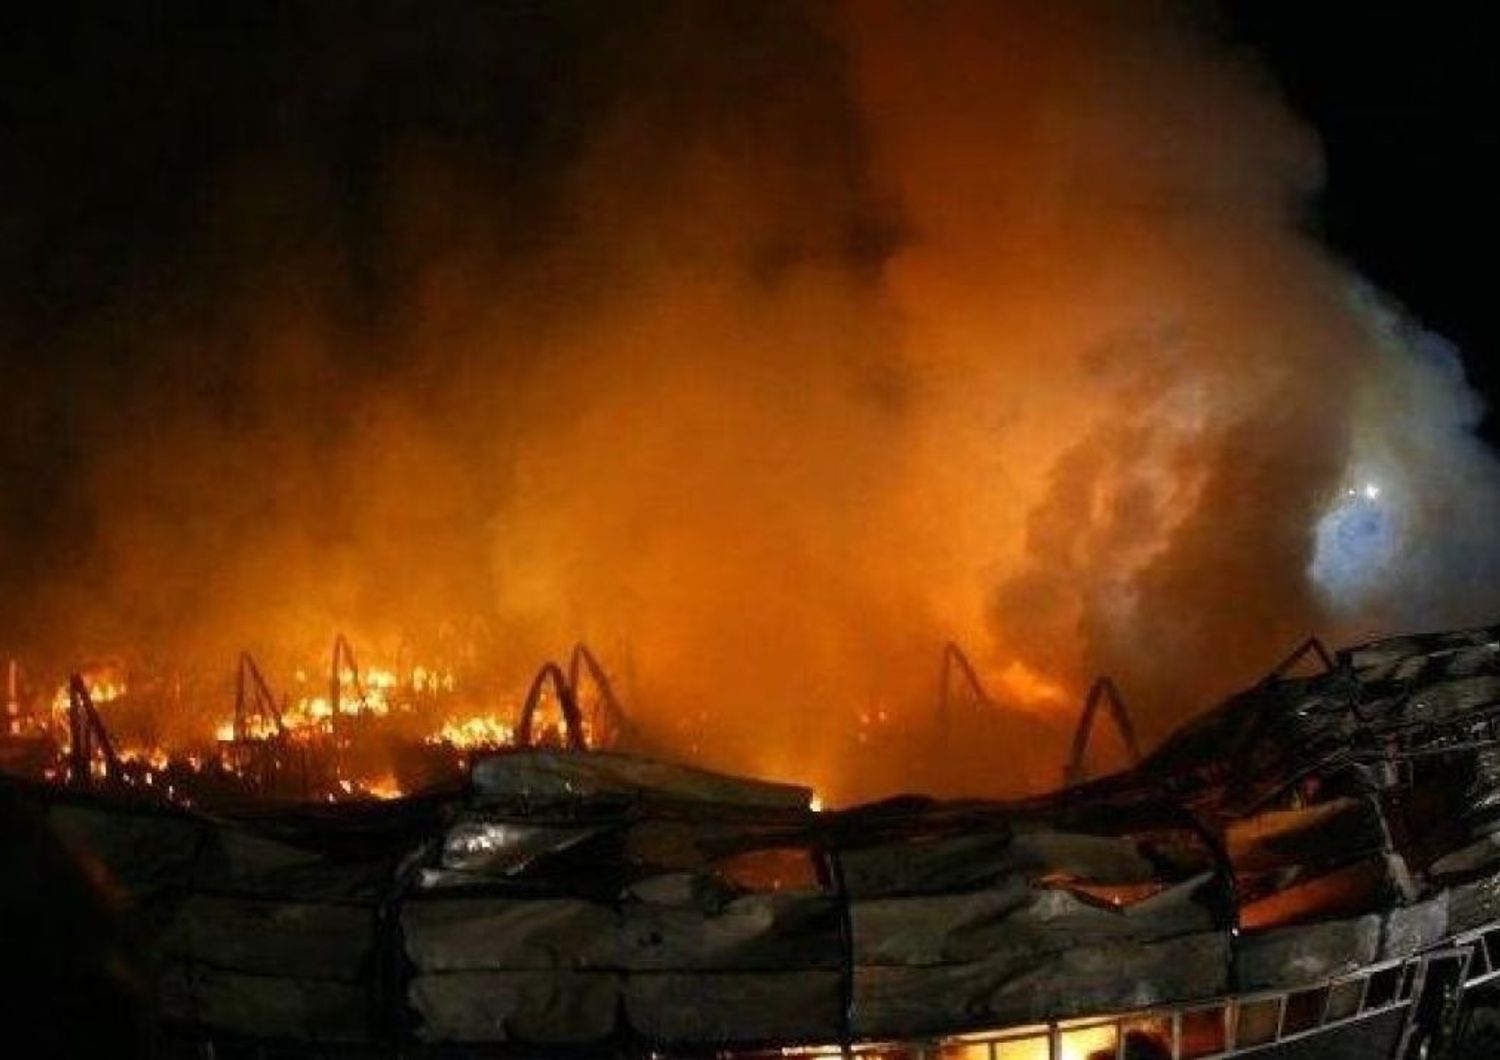 ThyssenKrupp incendio Torino 2007